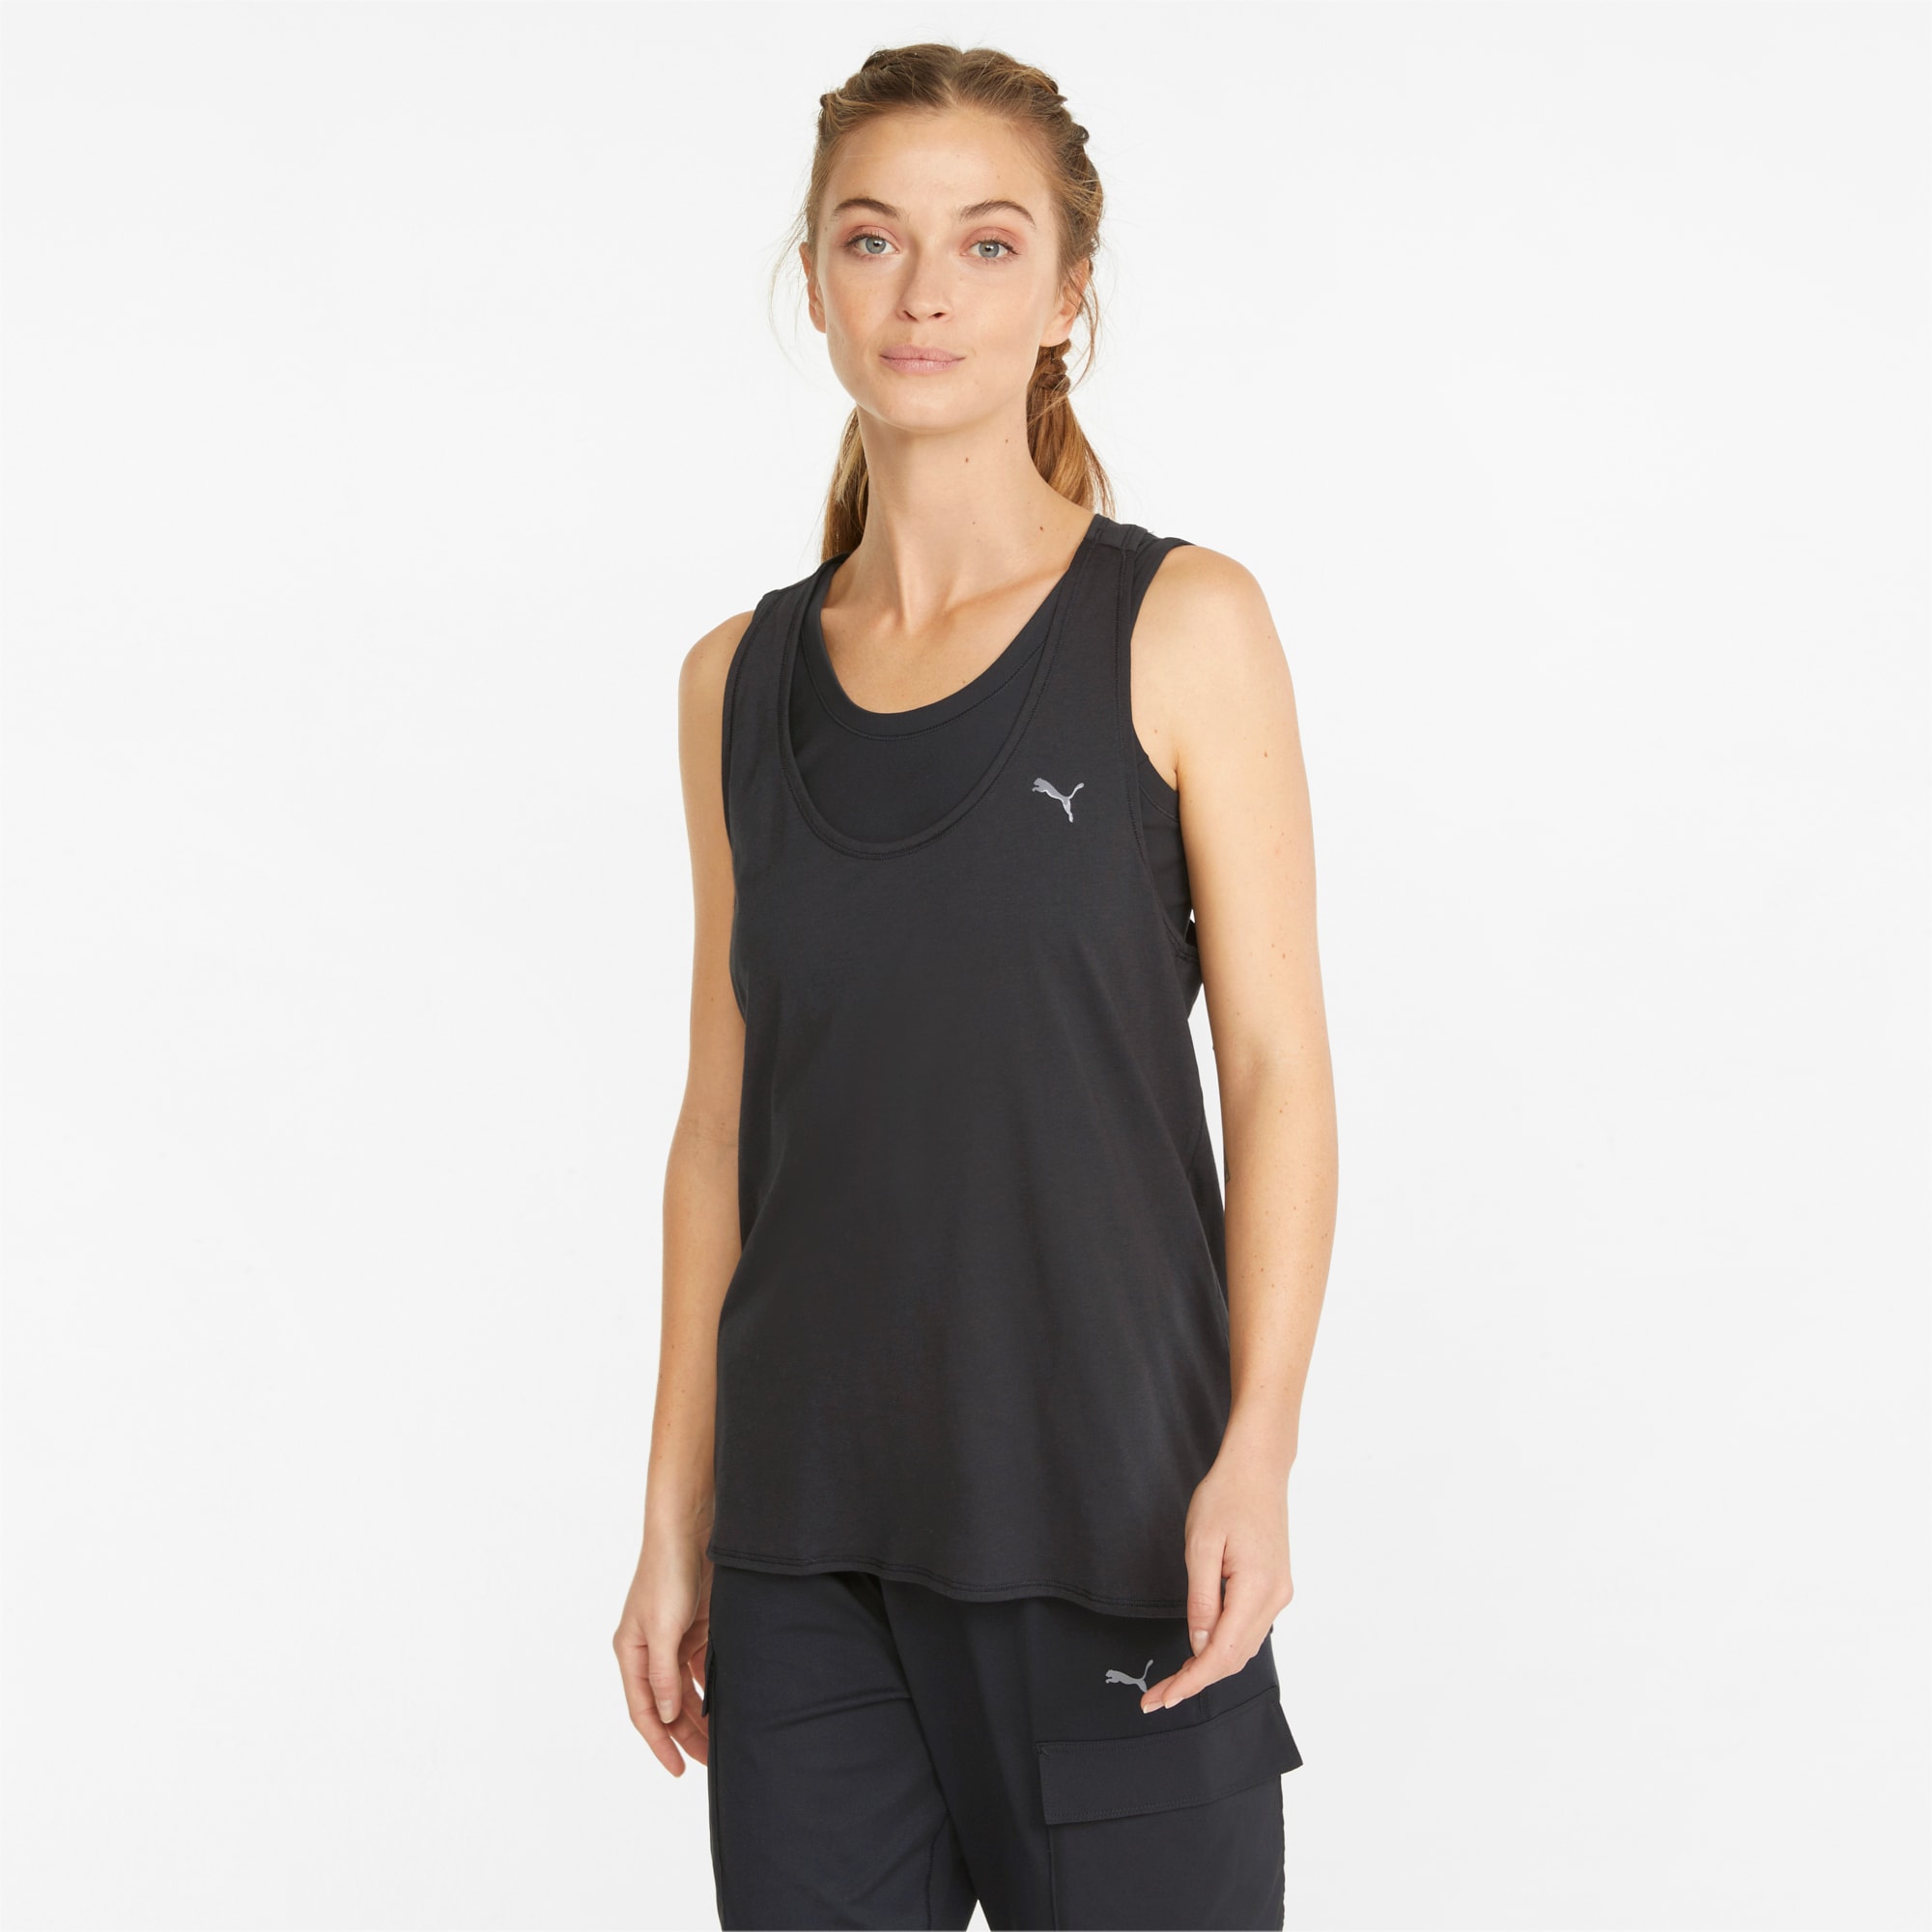 PUMA Studio Foundation Relax Women's Training Tank Top Shirt, Black, Size XS, Clothing